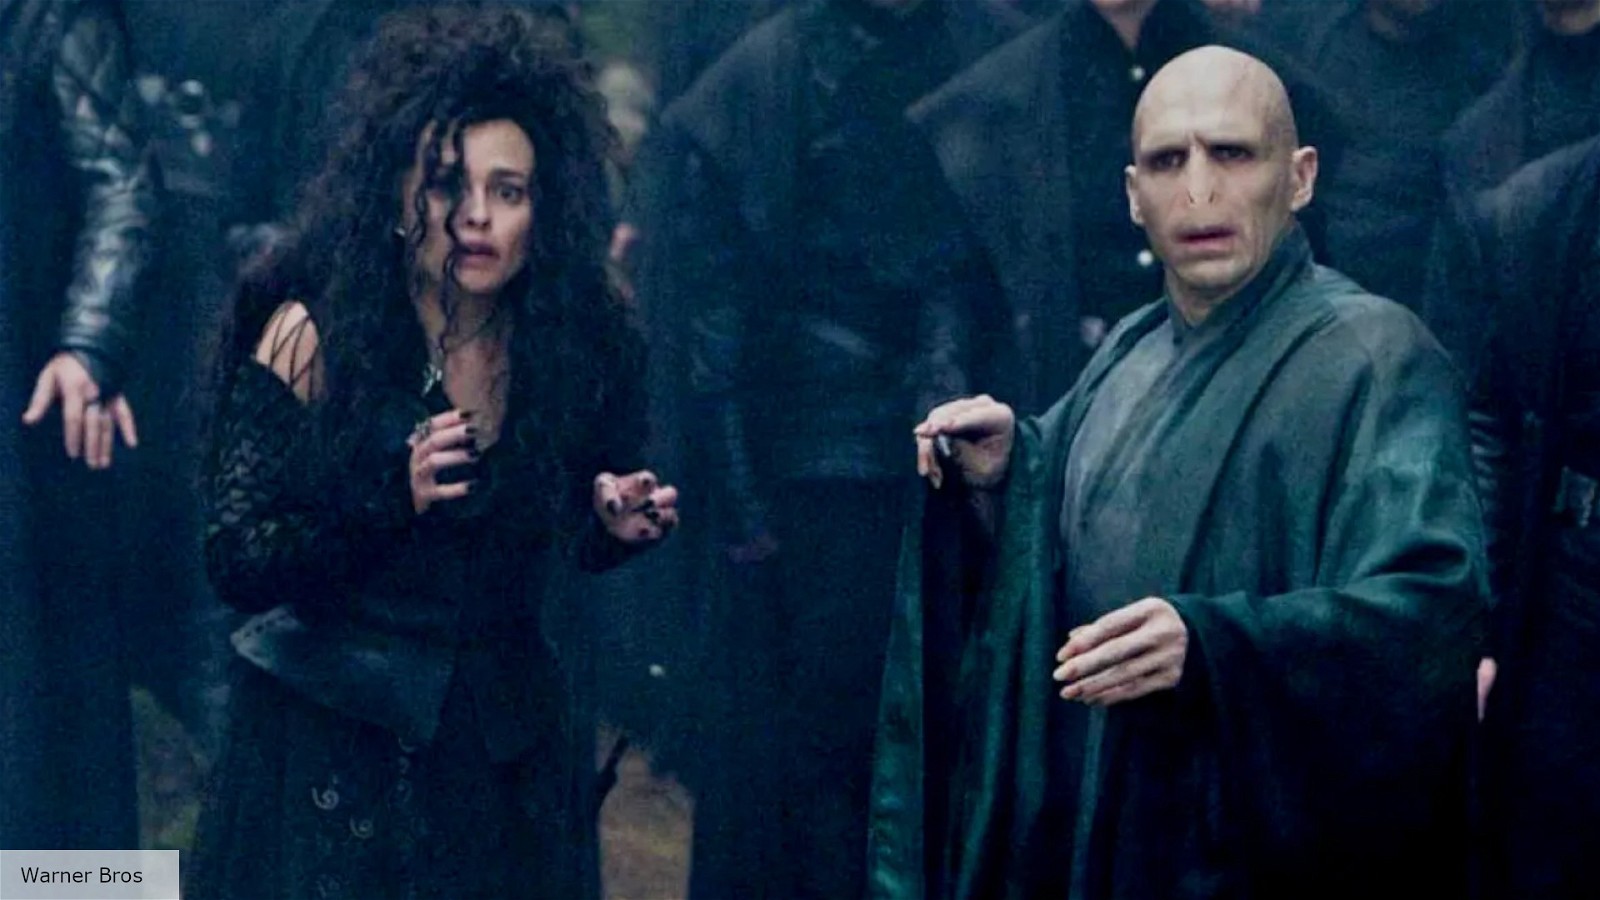 Helena Bonham Carter and Ralph Fiennes as Bellatrix Lestrange and Voldemort